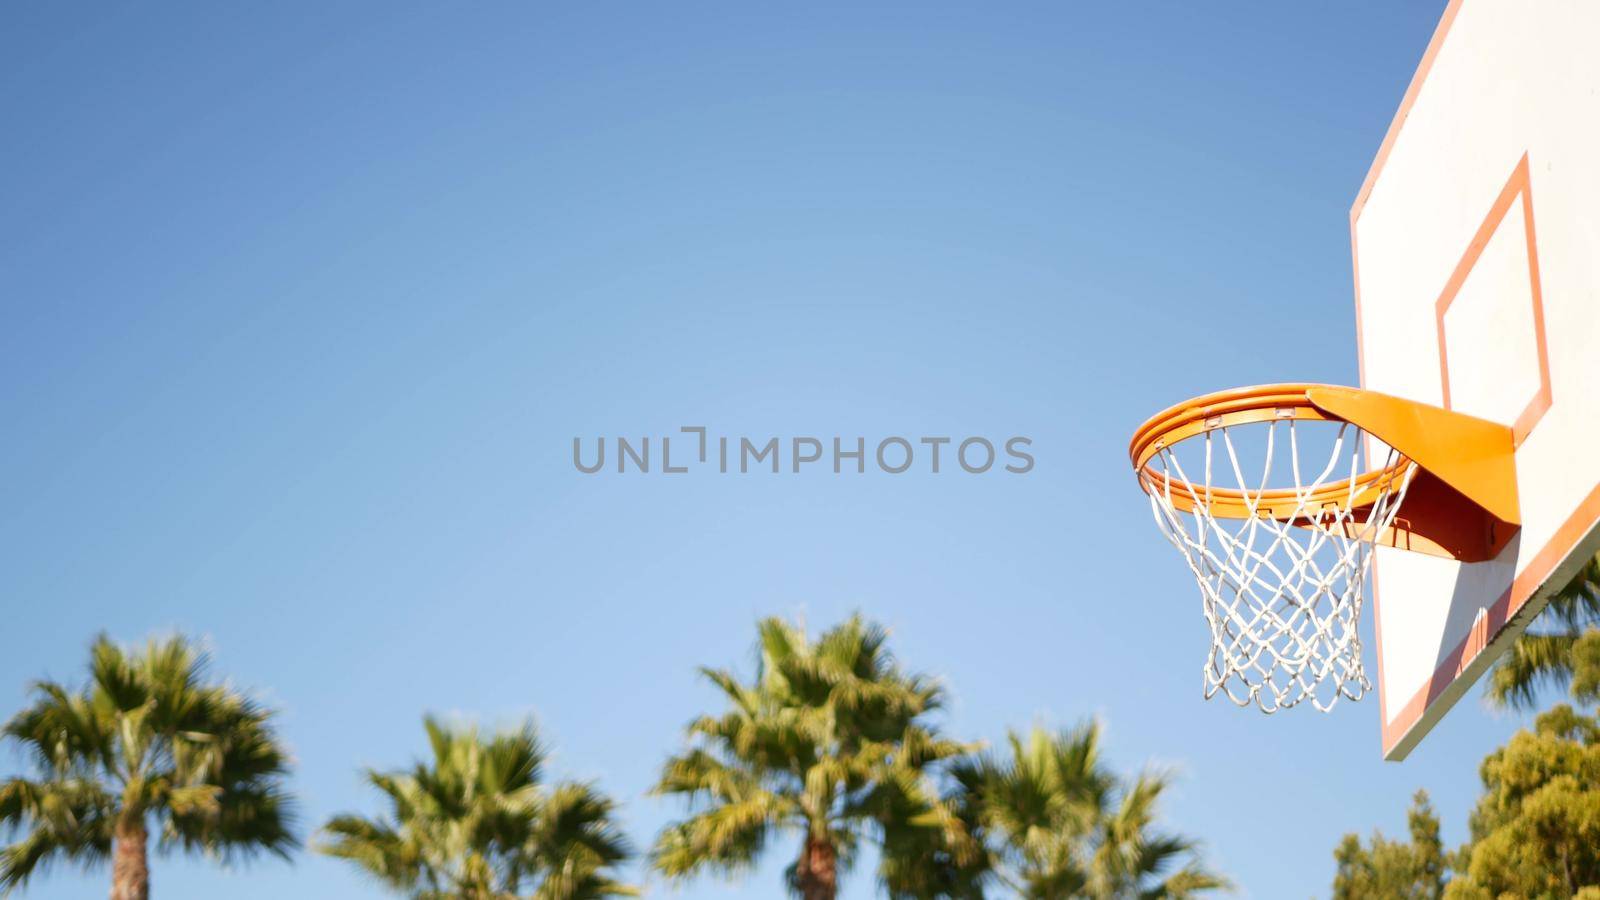 Basketball court outdoors, orange hoop, net and backboard for basket ball game. by DogoraSun